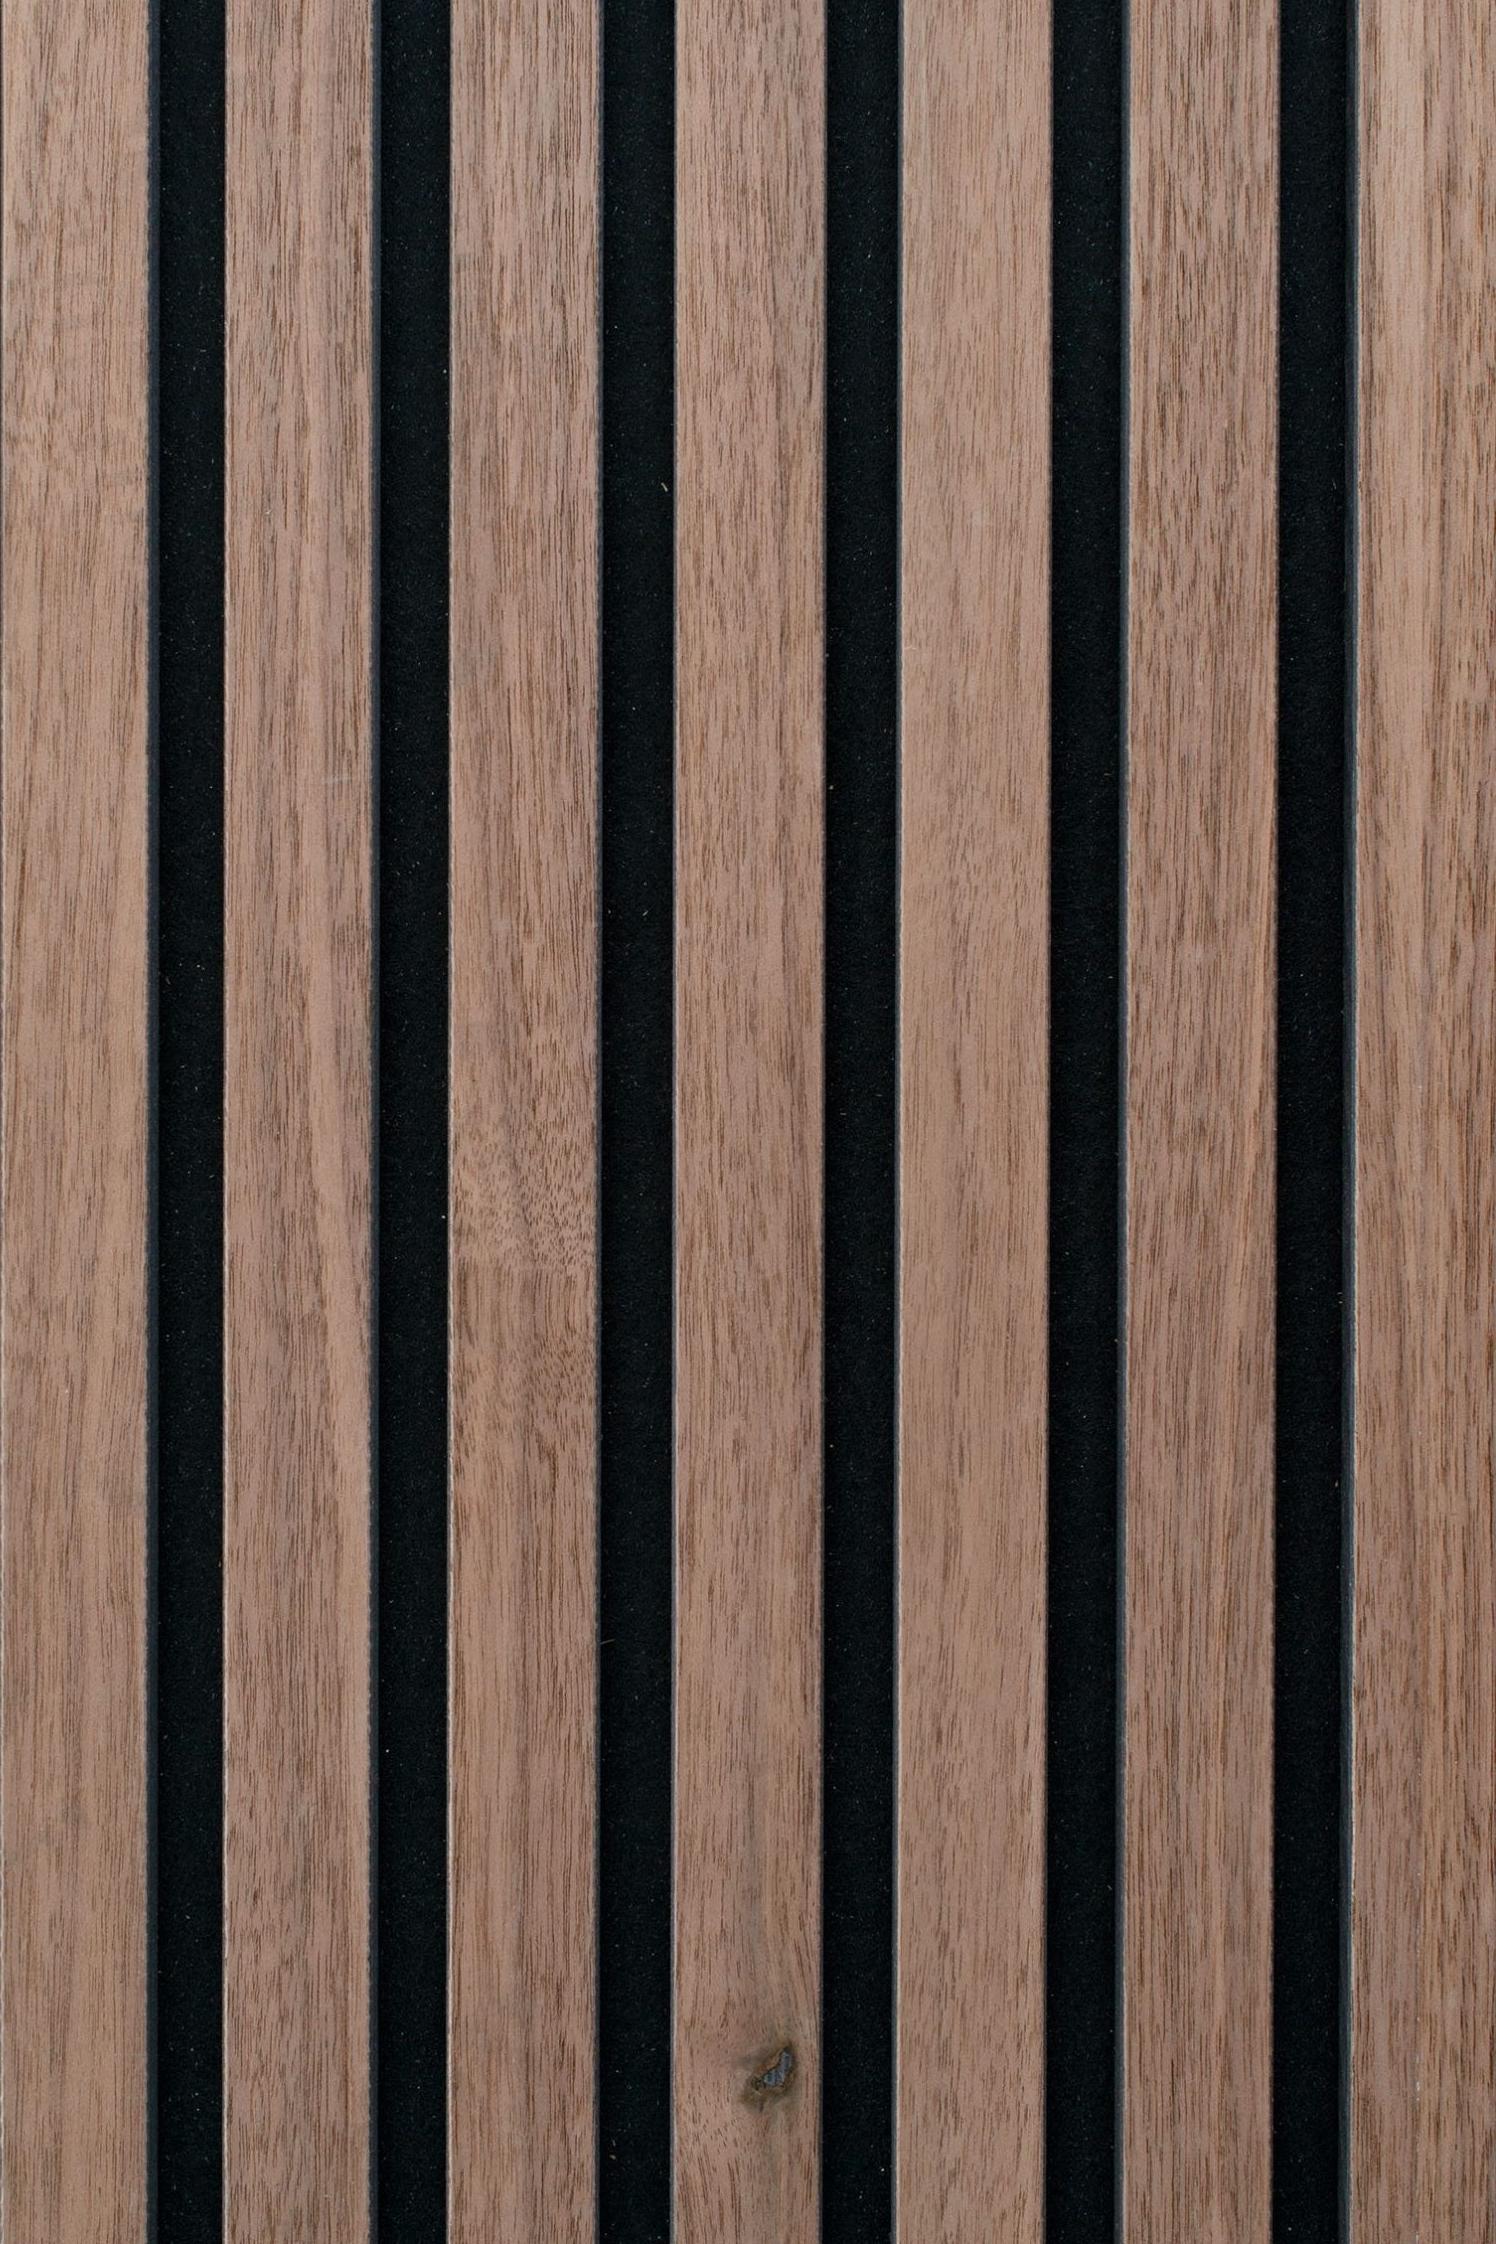 Nawood Walnut 300x60x2,2 akustični panel sa drvenim letvicama 1.80